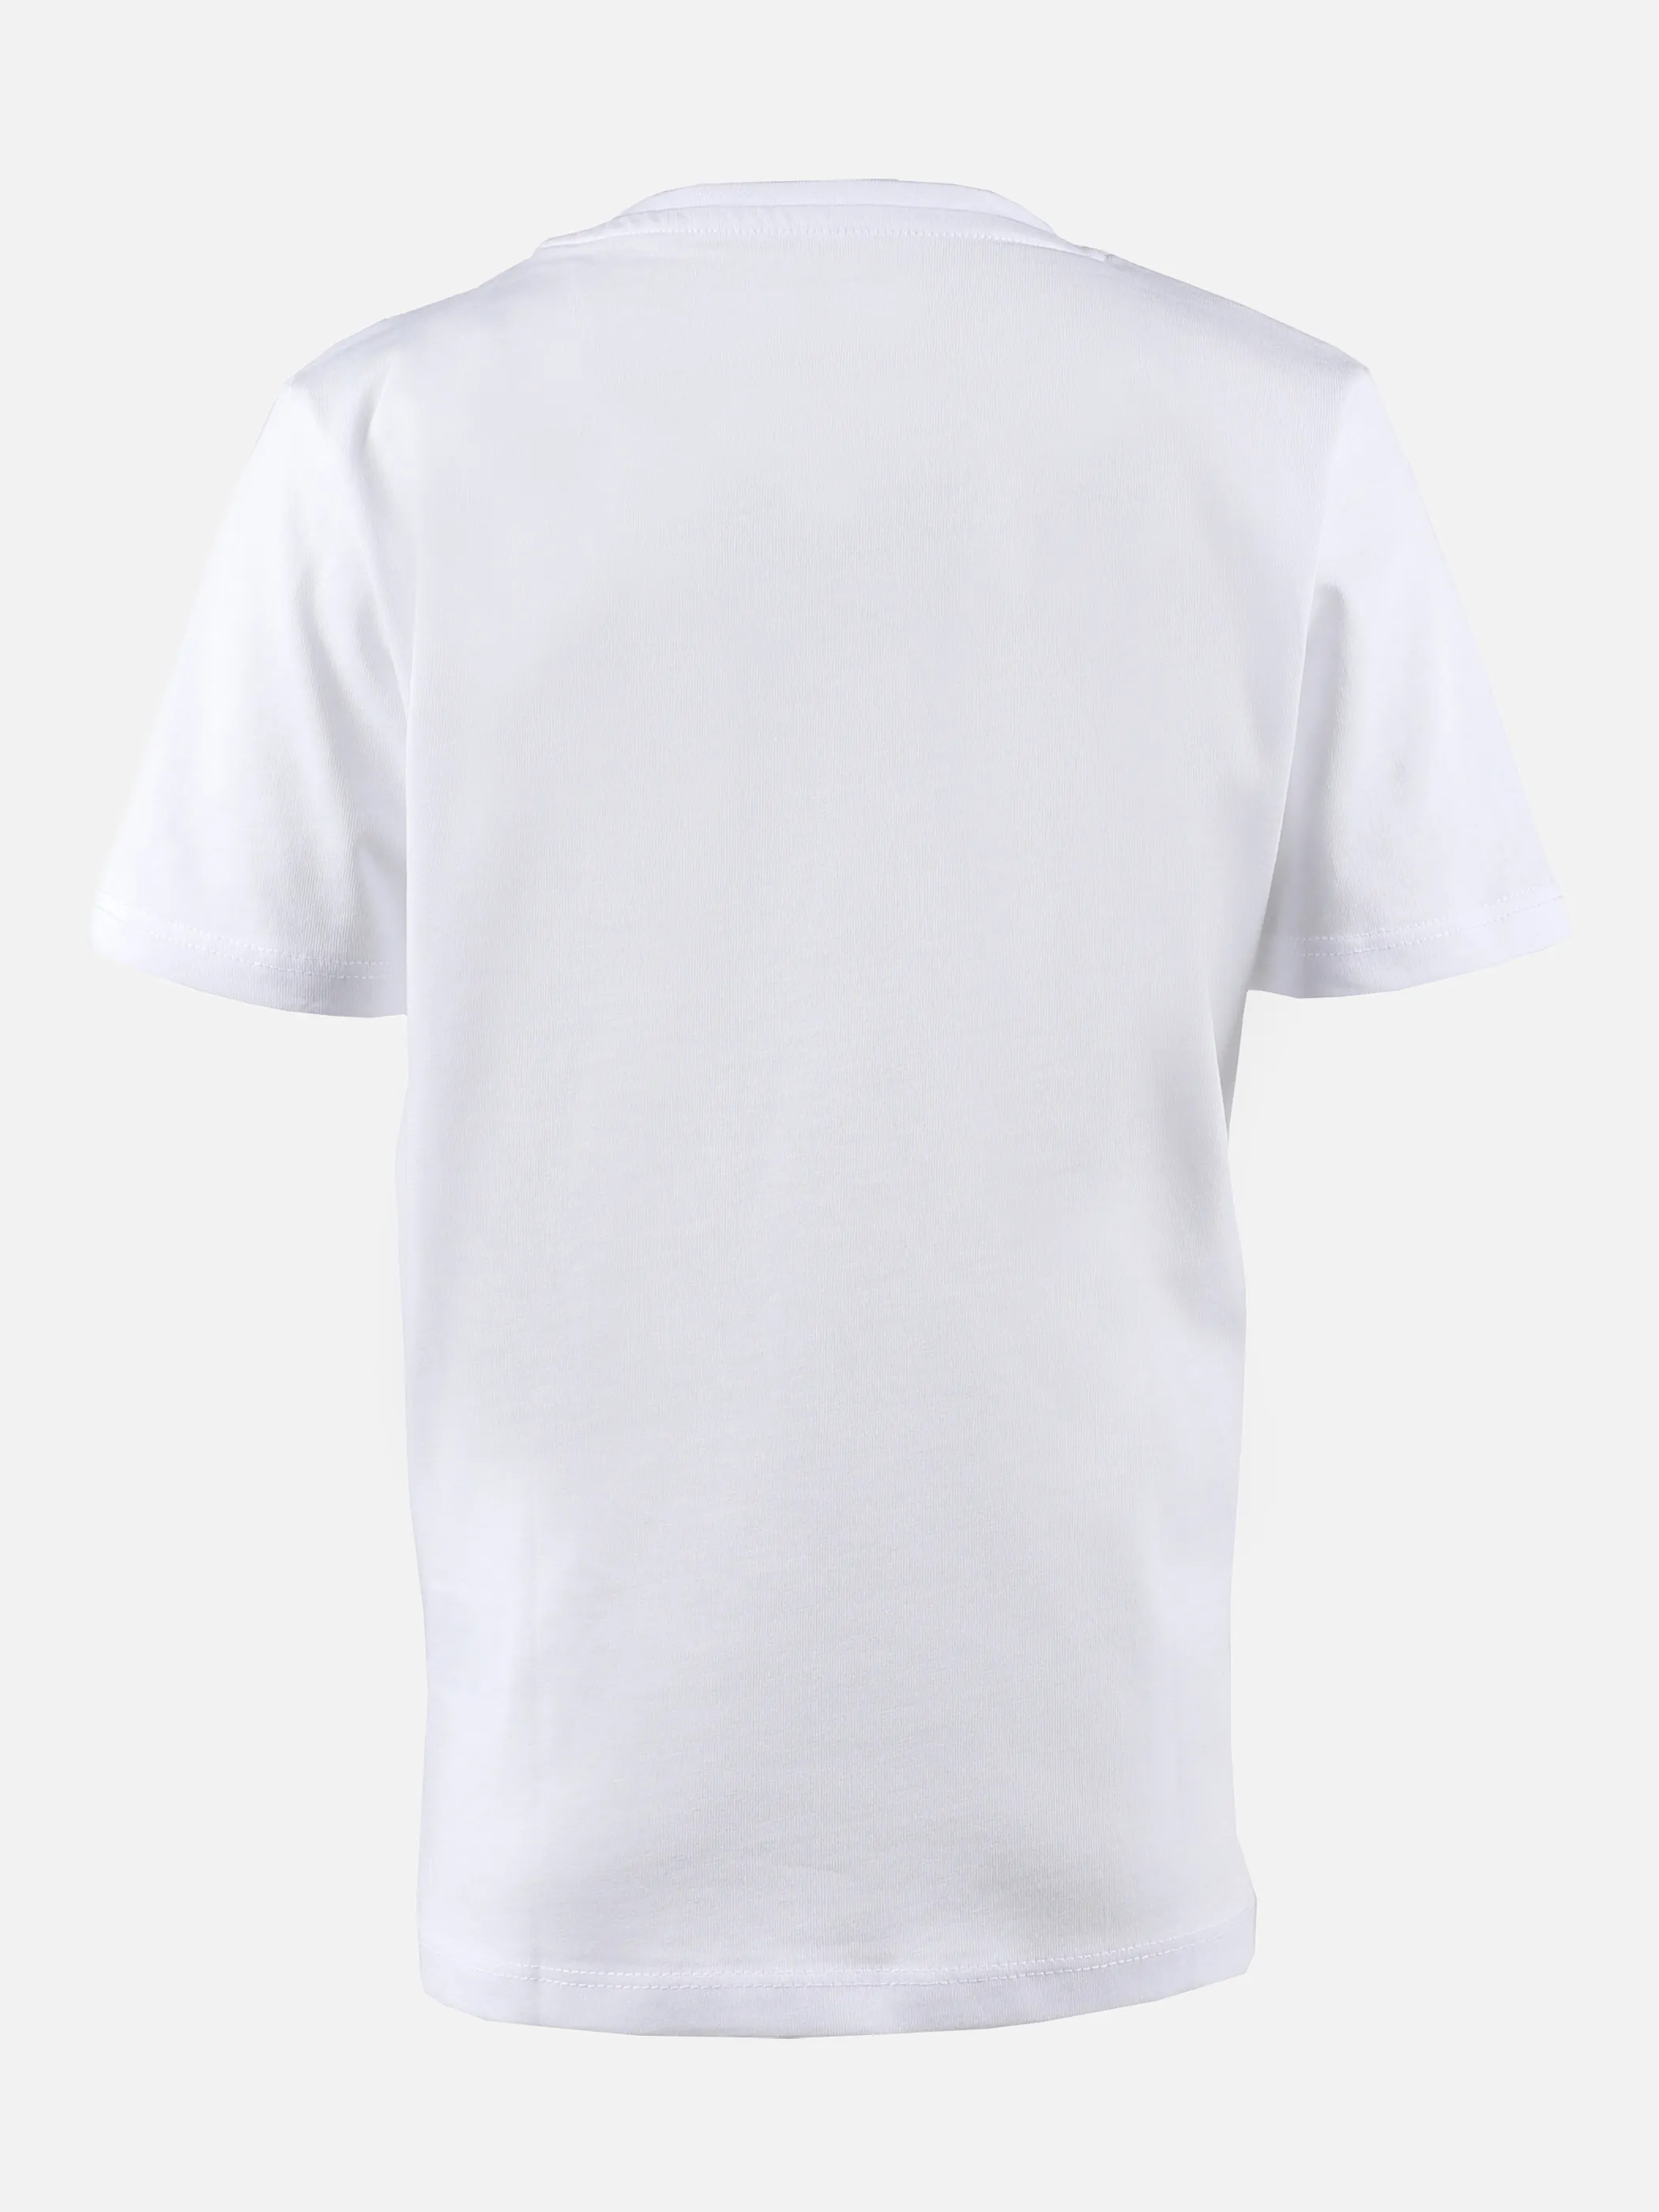 Tom Tailor 1031864 printed t-shirt Weiß 865869 20000 2